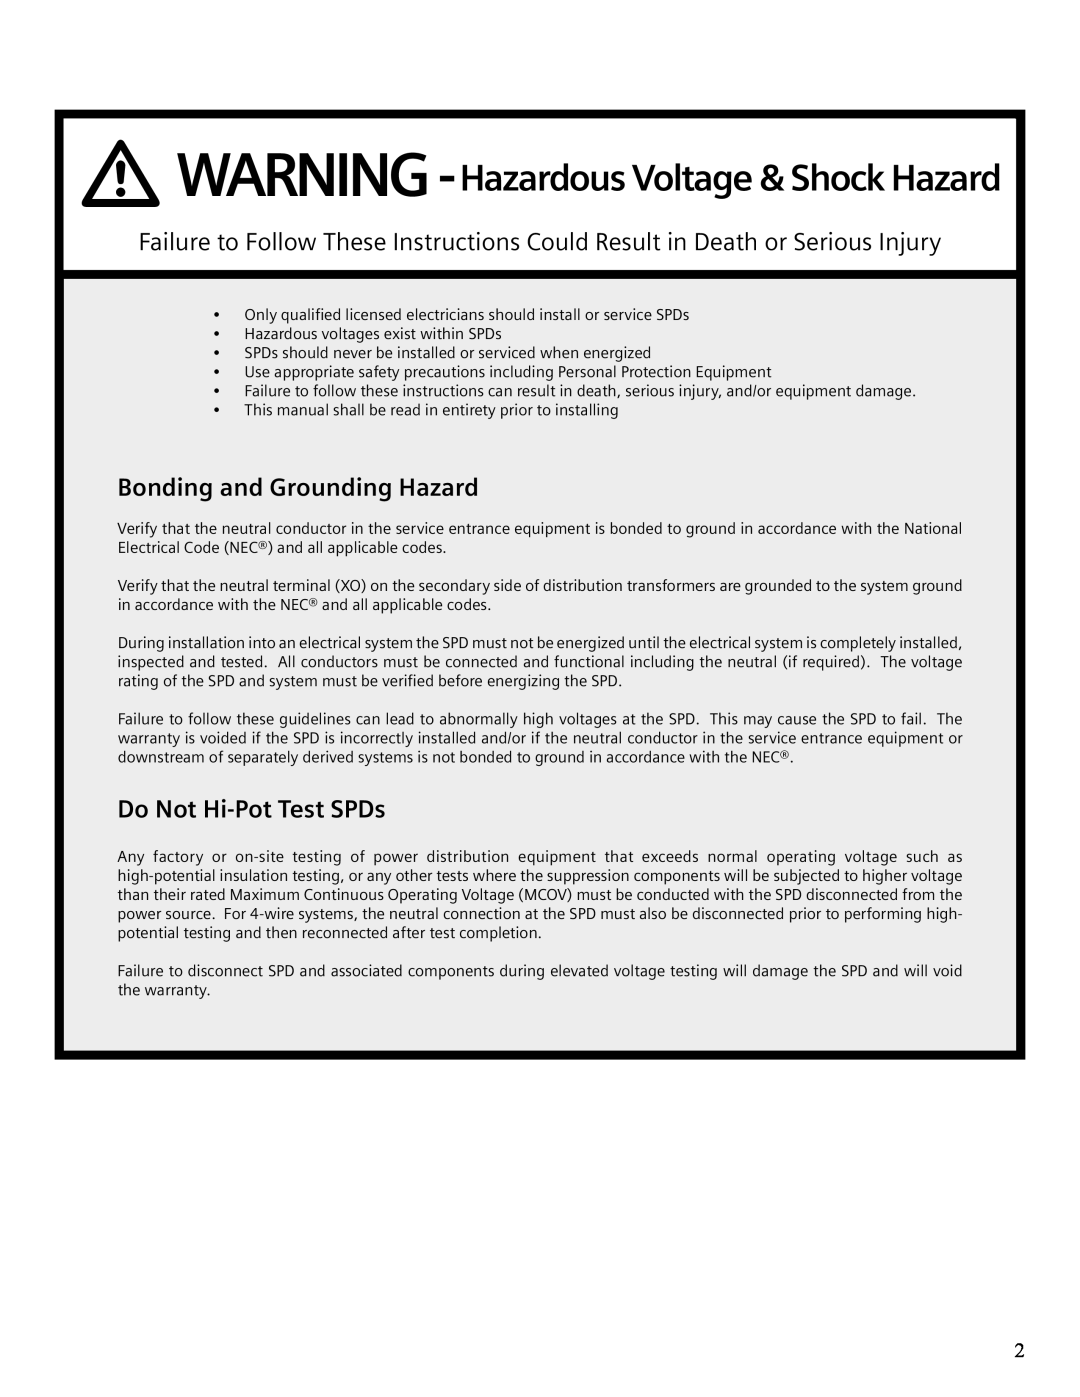 Siemens TPS3 user manual Bonding and Grounding Hazard, Do Not Hi-Pot Test SPDs, V WARNING-Hazardous Voltage & Shock Hazard 